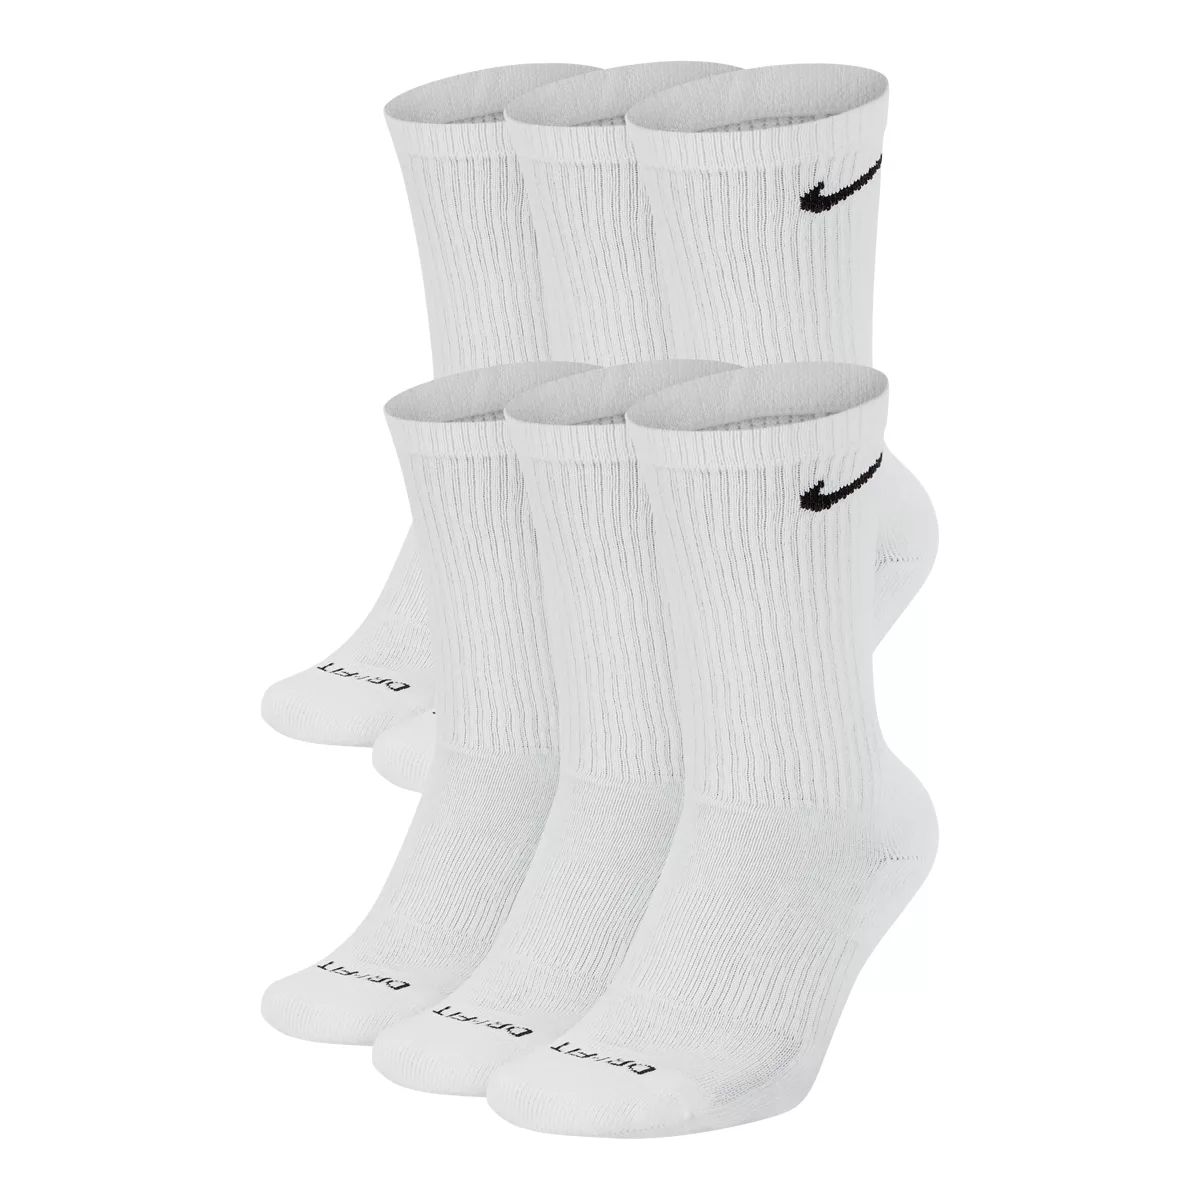 Nike elite socks high cut sport socks NBA basketball socks